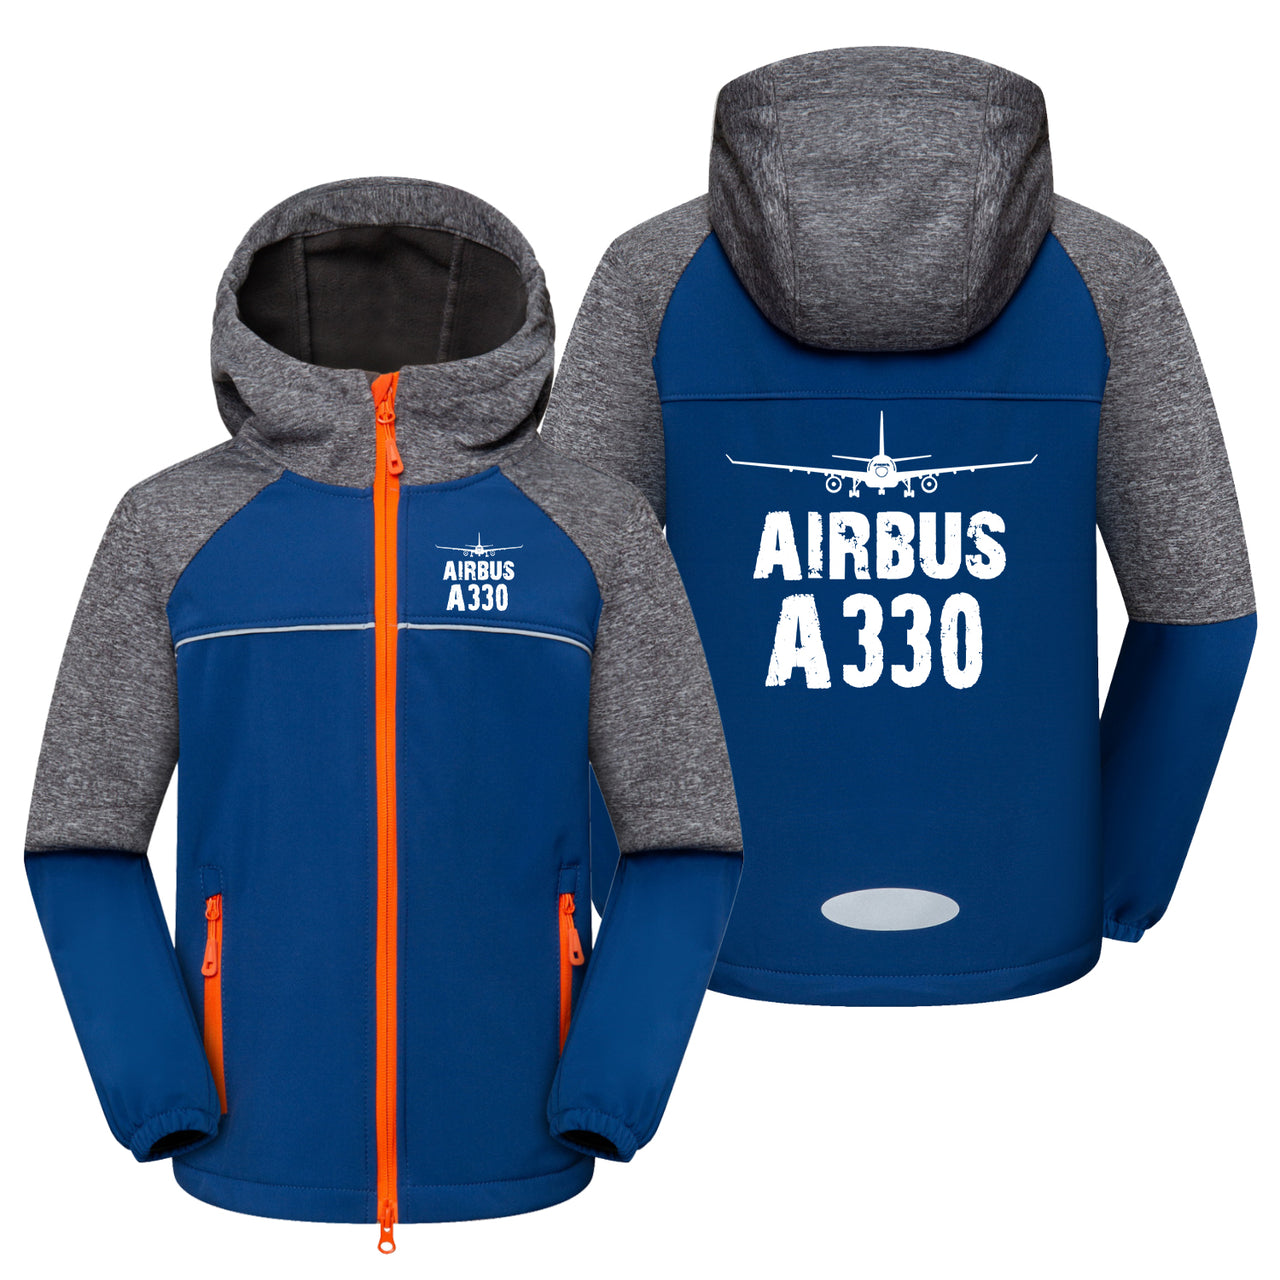 Airbus A330 & Plane Designed Children Polar Style Jackets